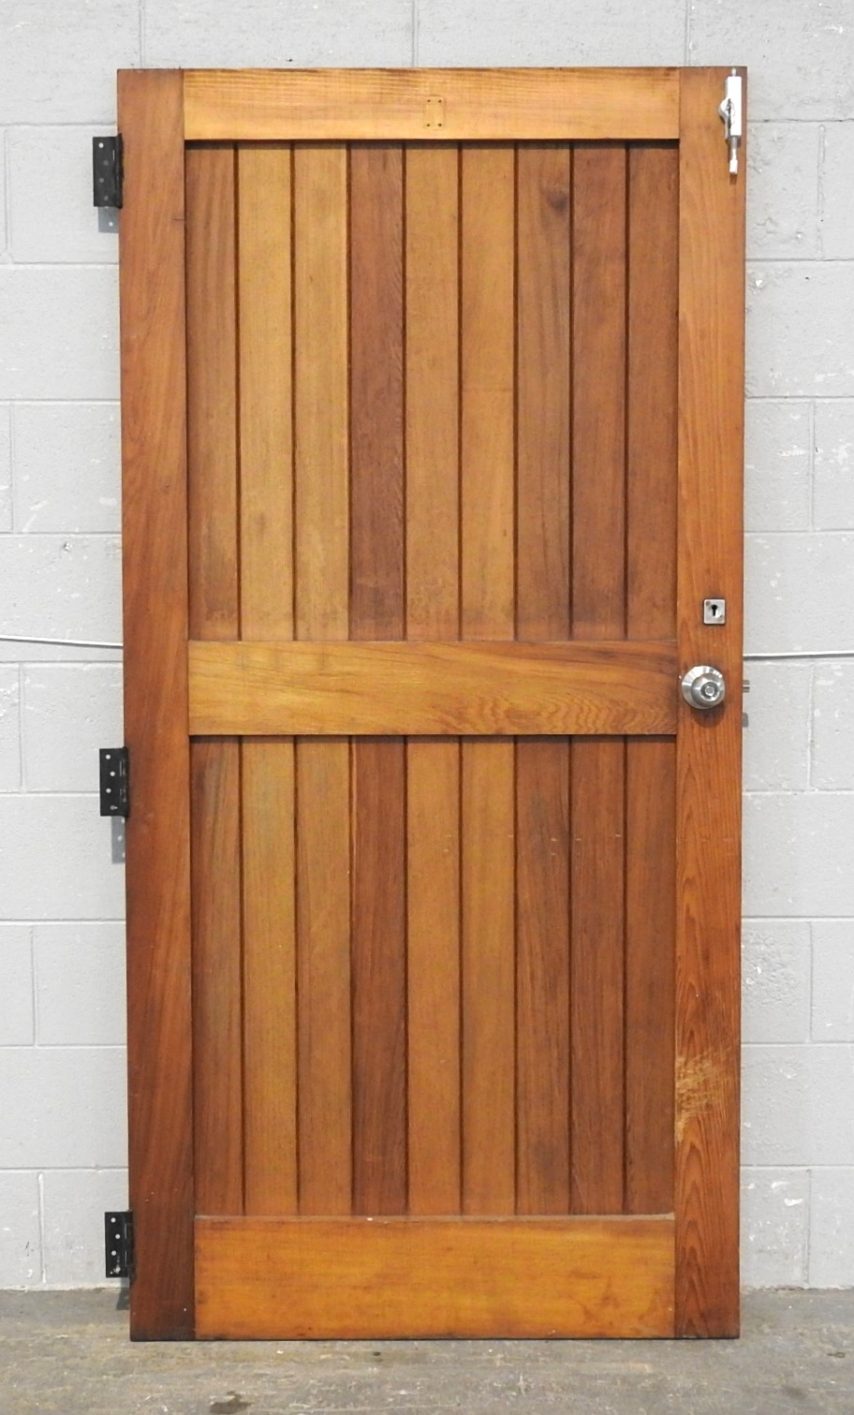 Wide Wooden (Cedar) Exterior TG&V Door - Unhung